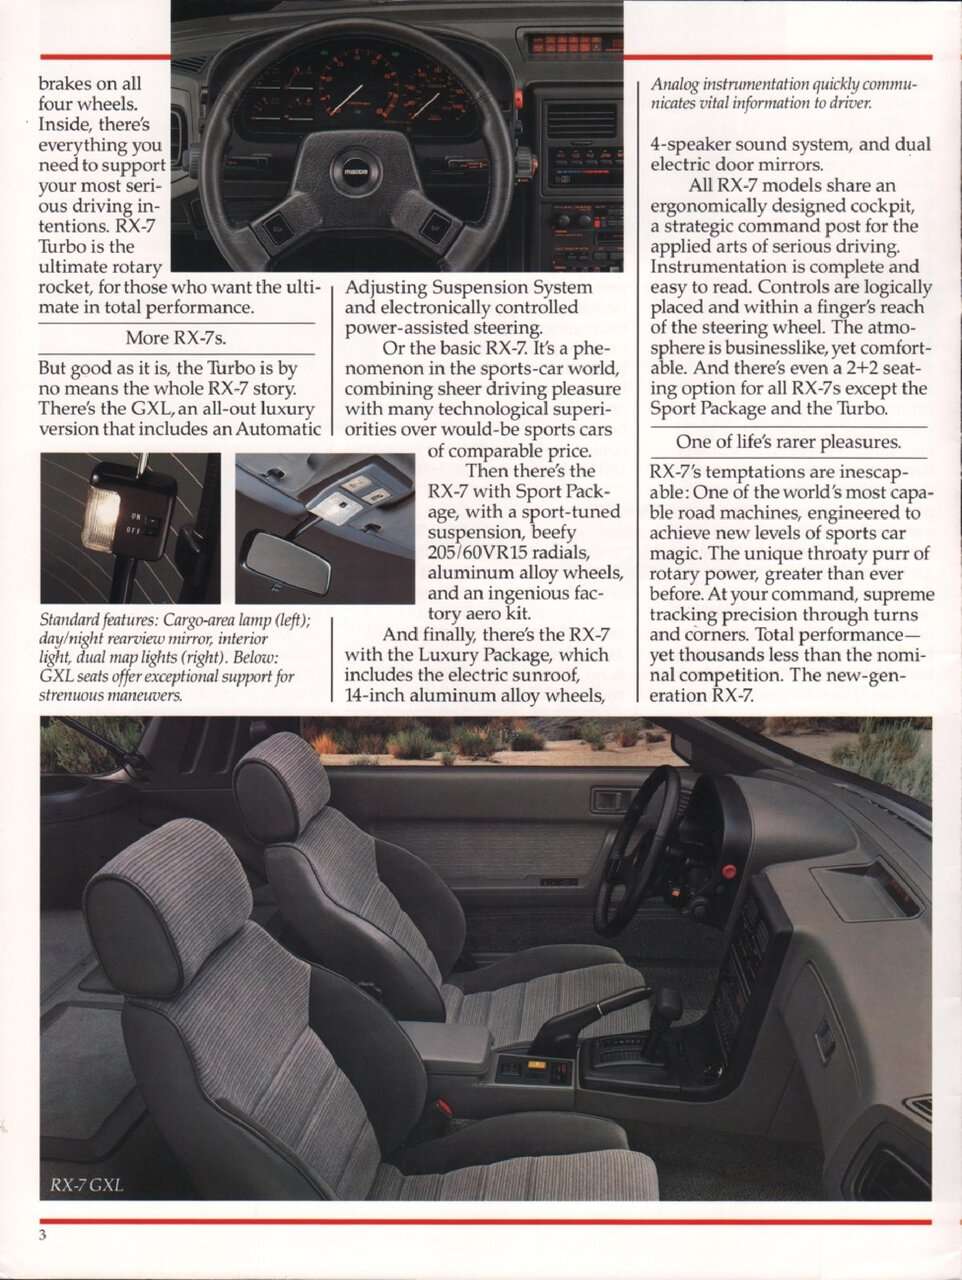 1987-Mazda-Full-Line-page-004.jpg